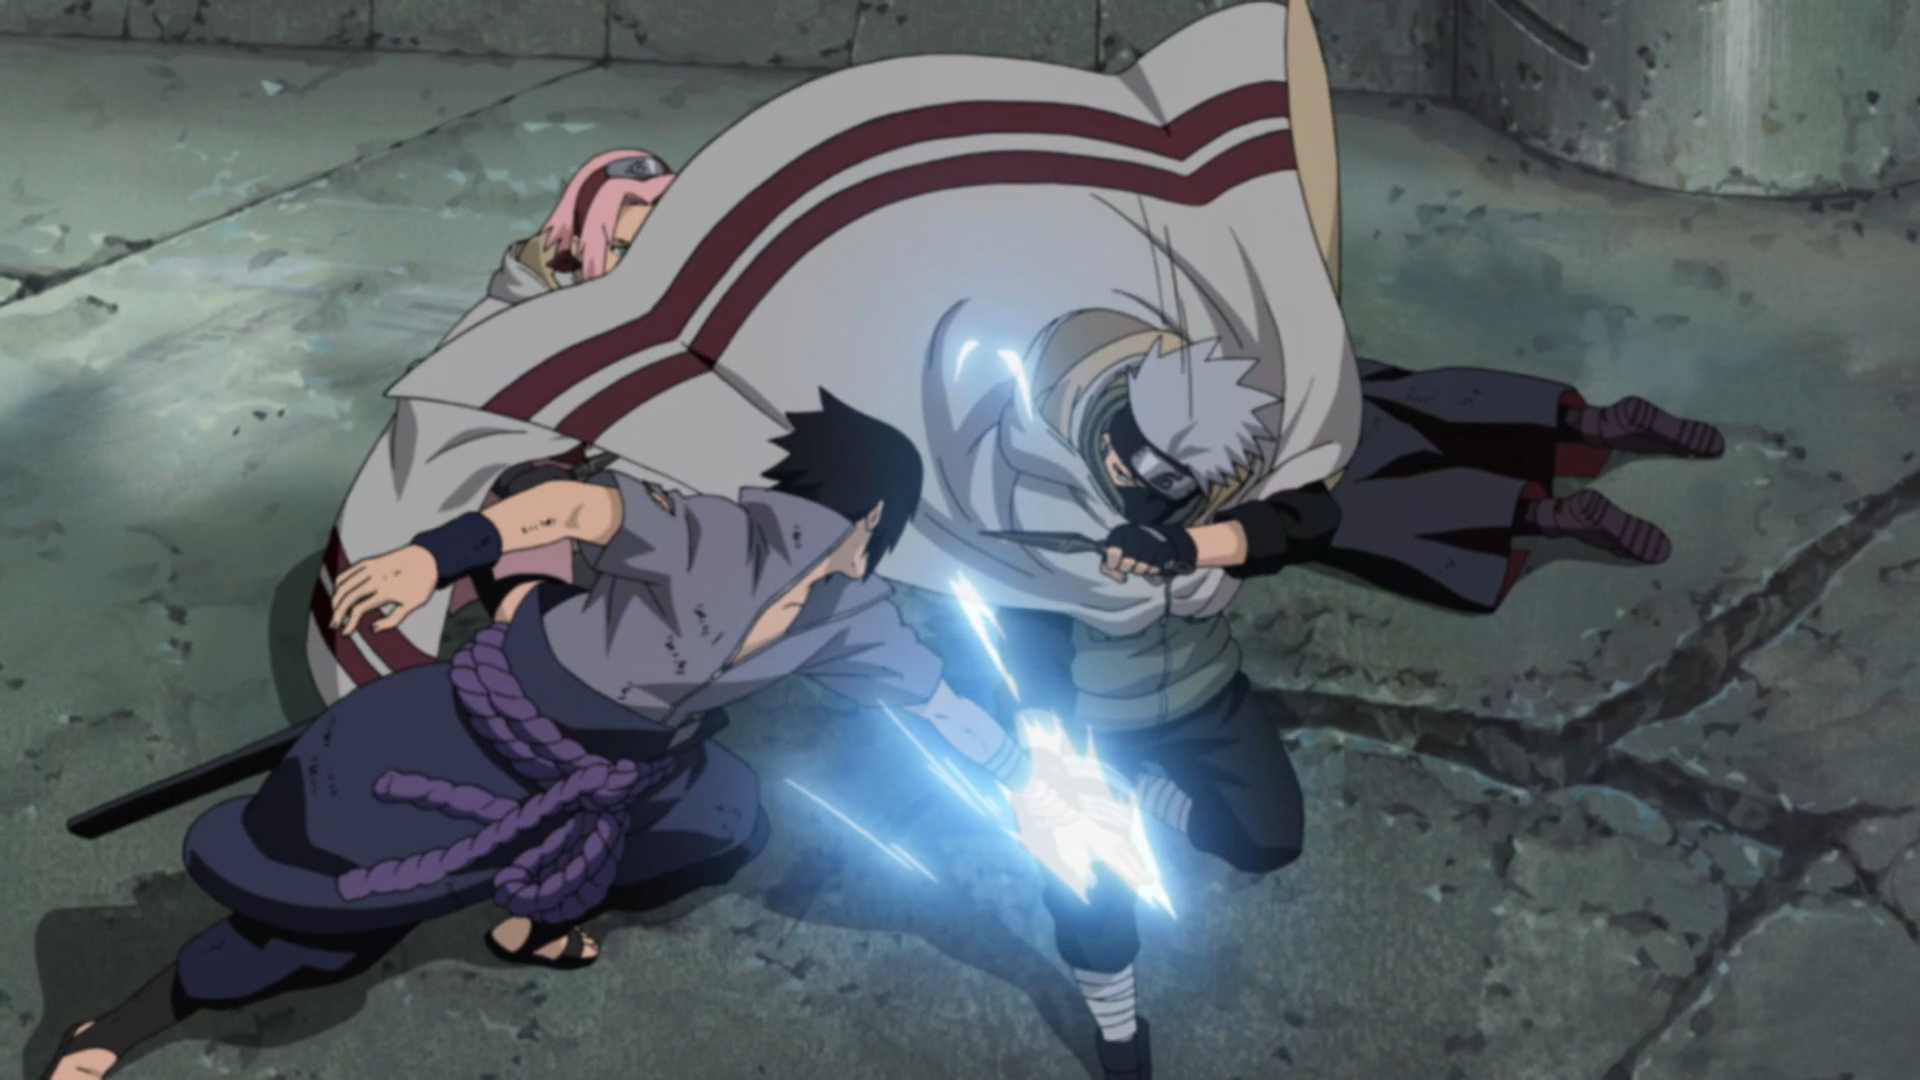 Naruto Shippuden: Kakashi Hatake vs. Obito Uchiha Full Fight (Eng